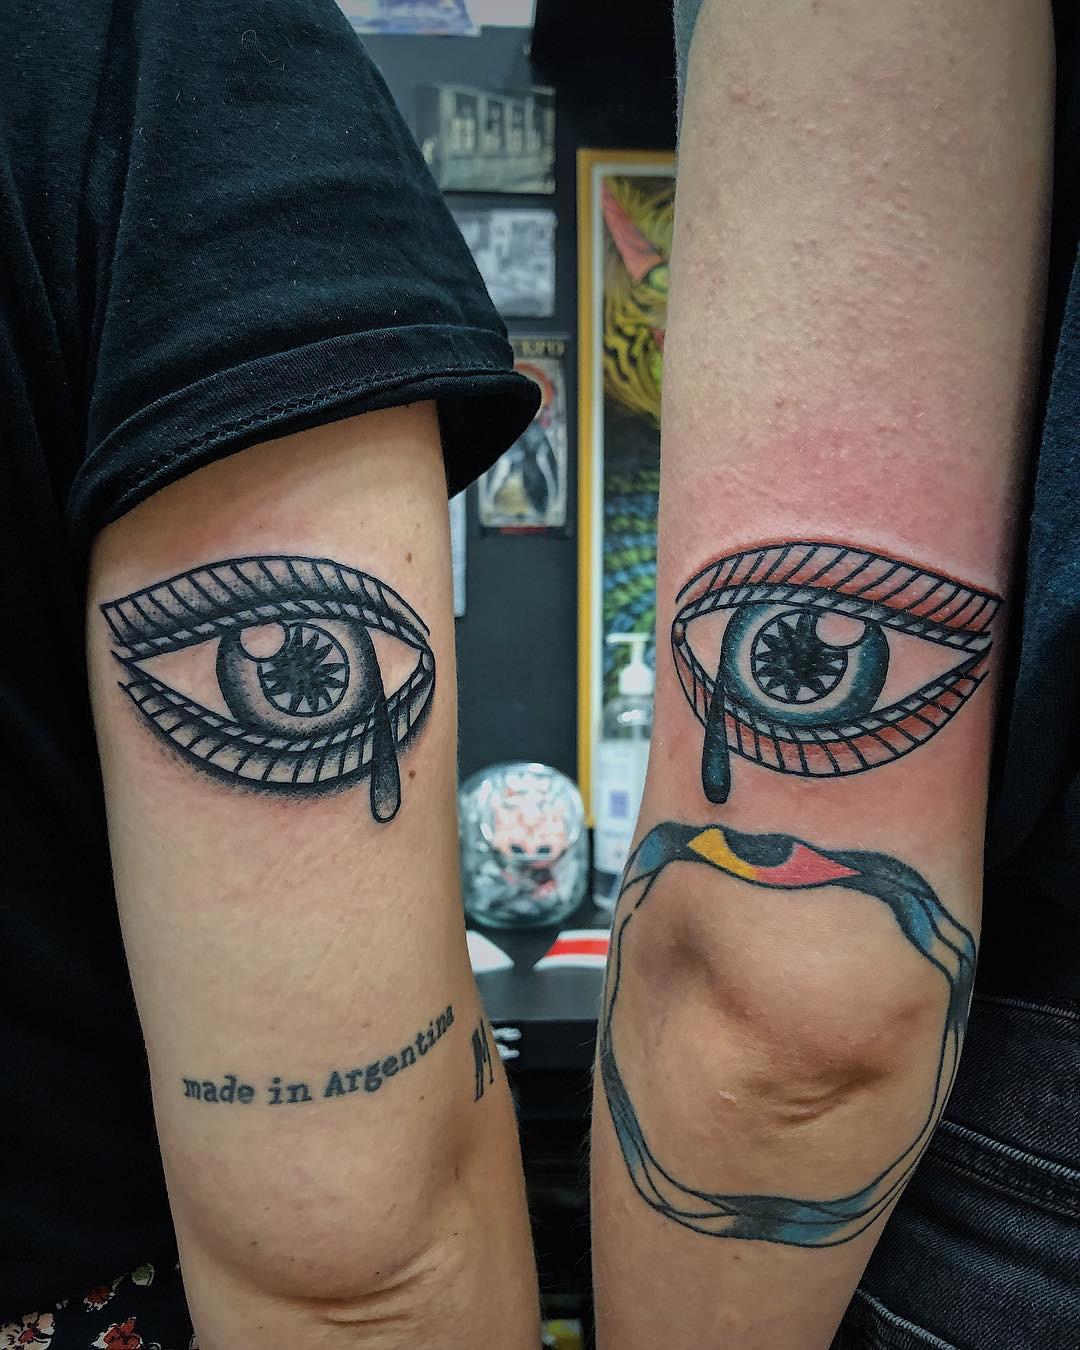 Inksearch tattoo Tetoviranje Pri Nejcu -  Nejc Sedeminosemdeset